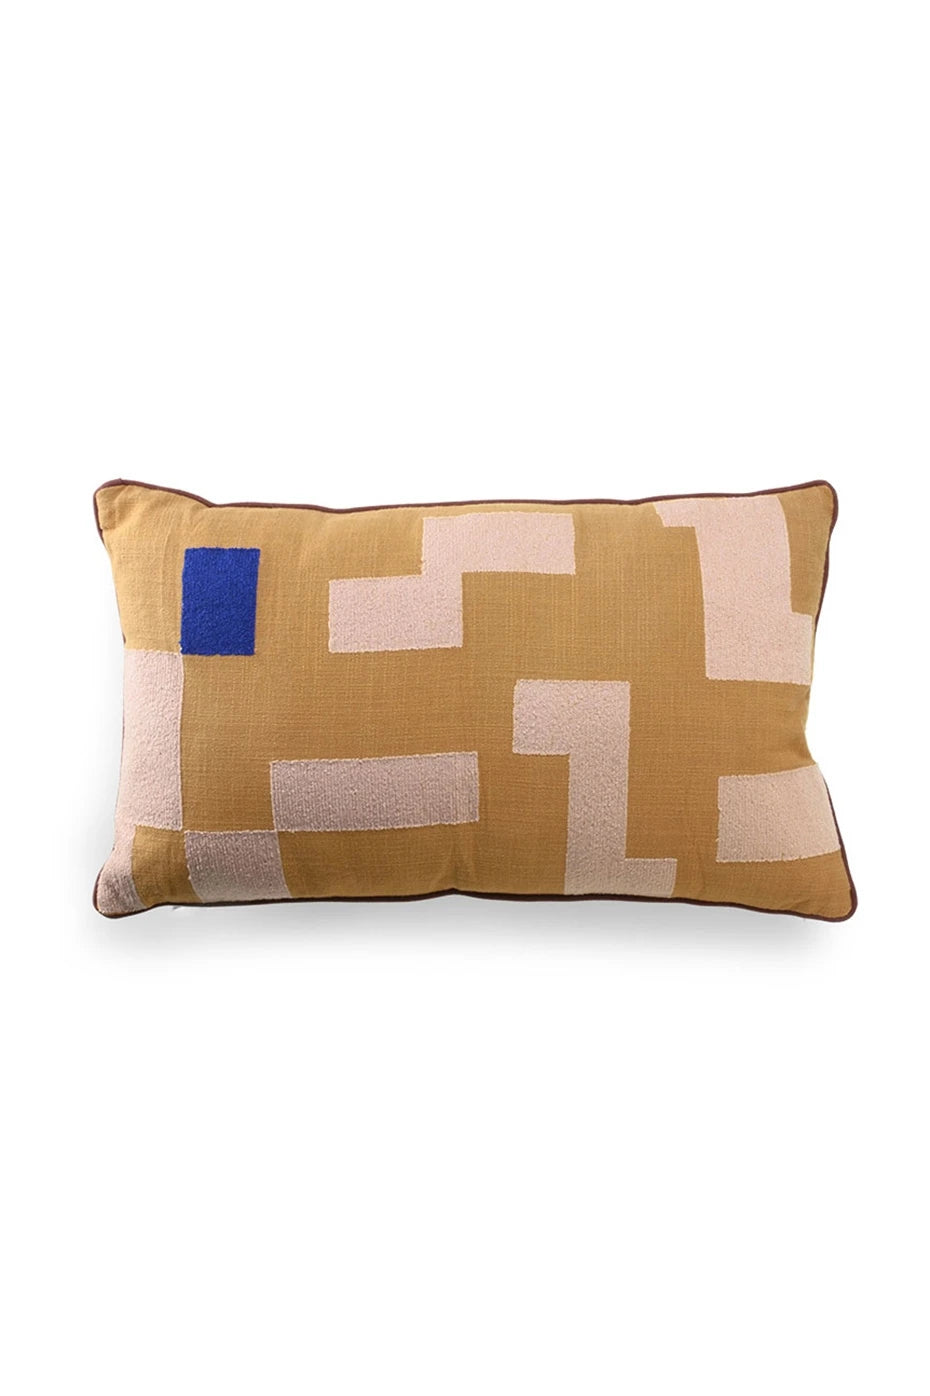 Double-sided cushion stitched squeres van HKliving te koop bij LEEF mode en accessoires Meppel